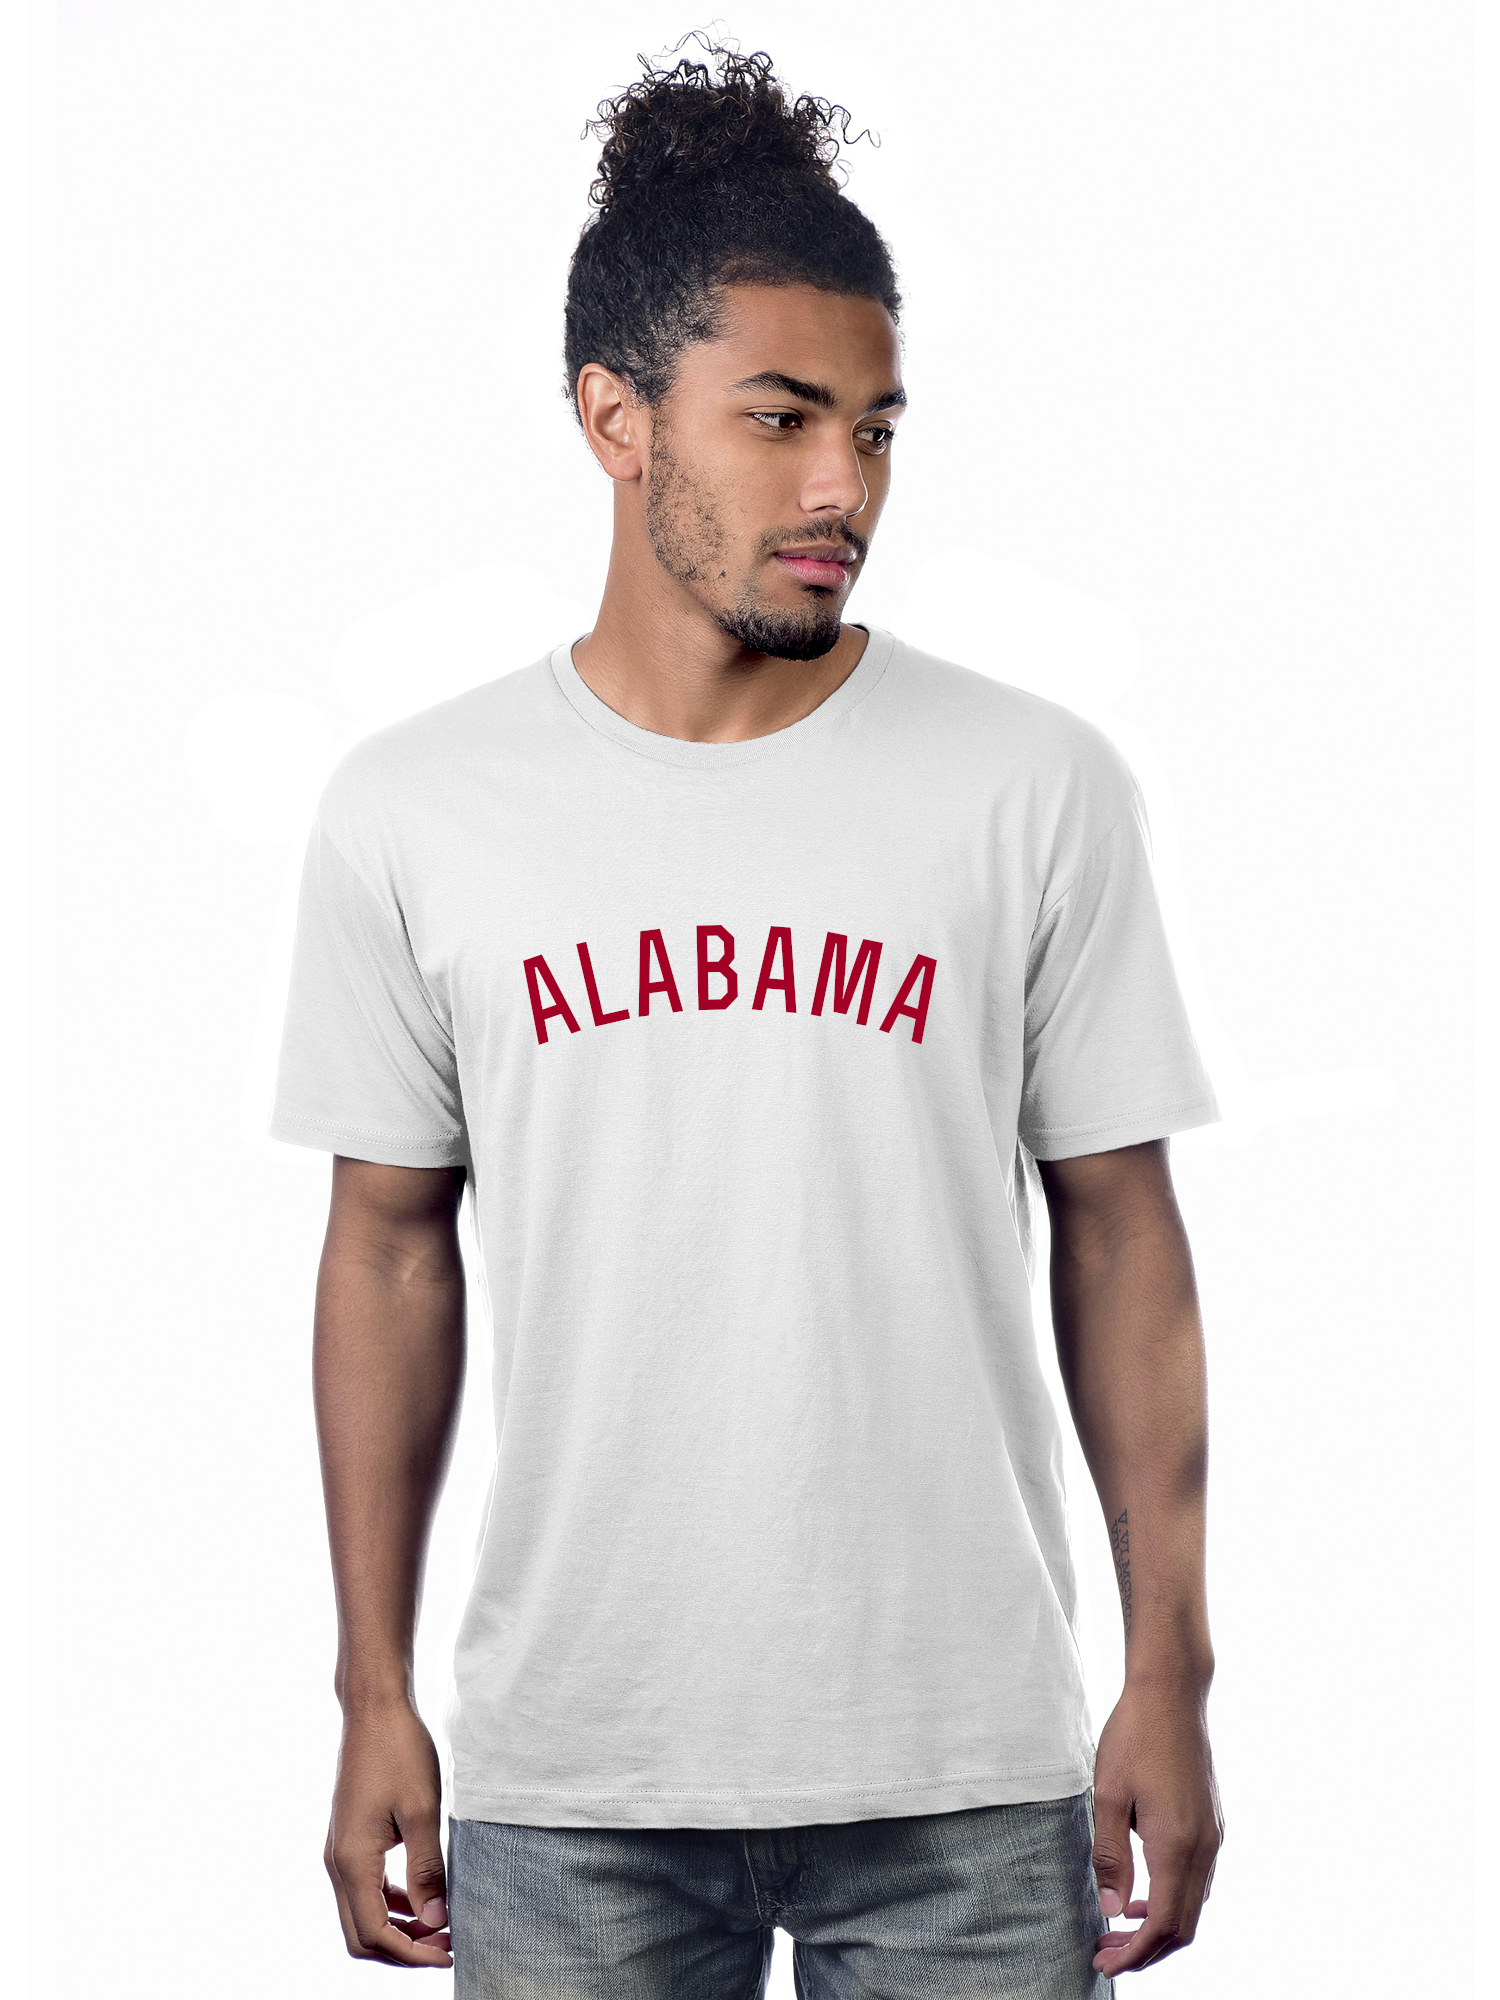 Daxton Alabama Tshirt Premium Basic Short Sleeves Crew Neck Tee - image 1 of 2